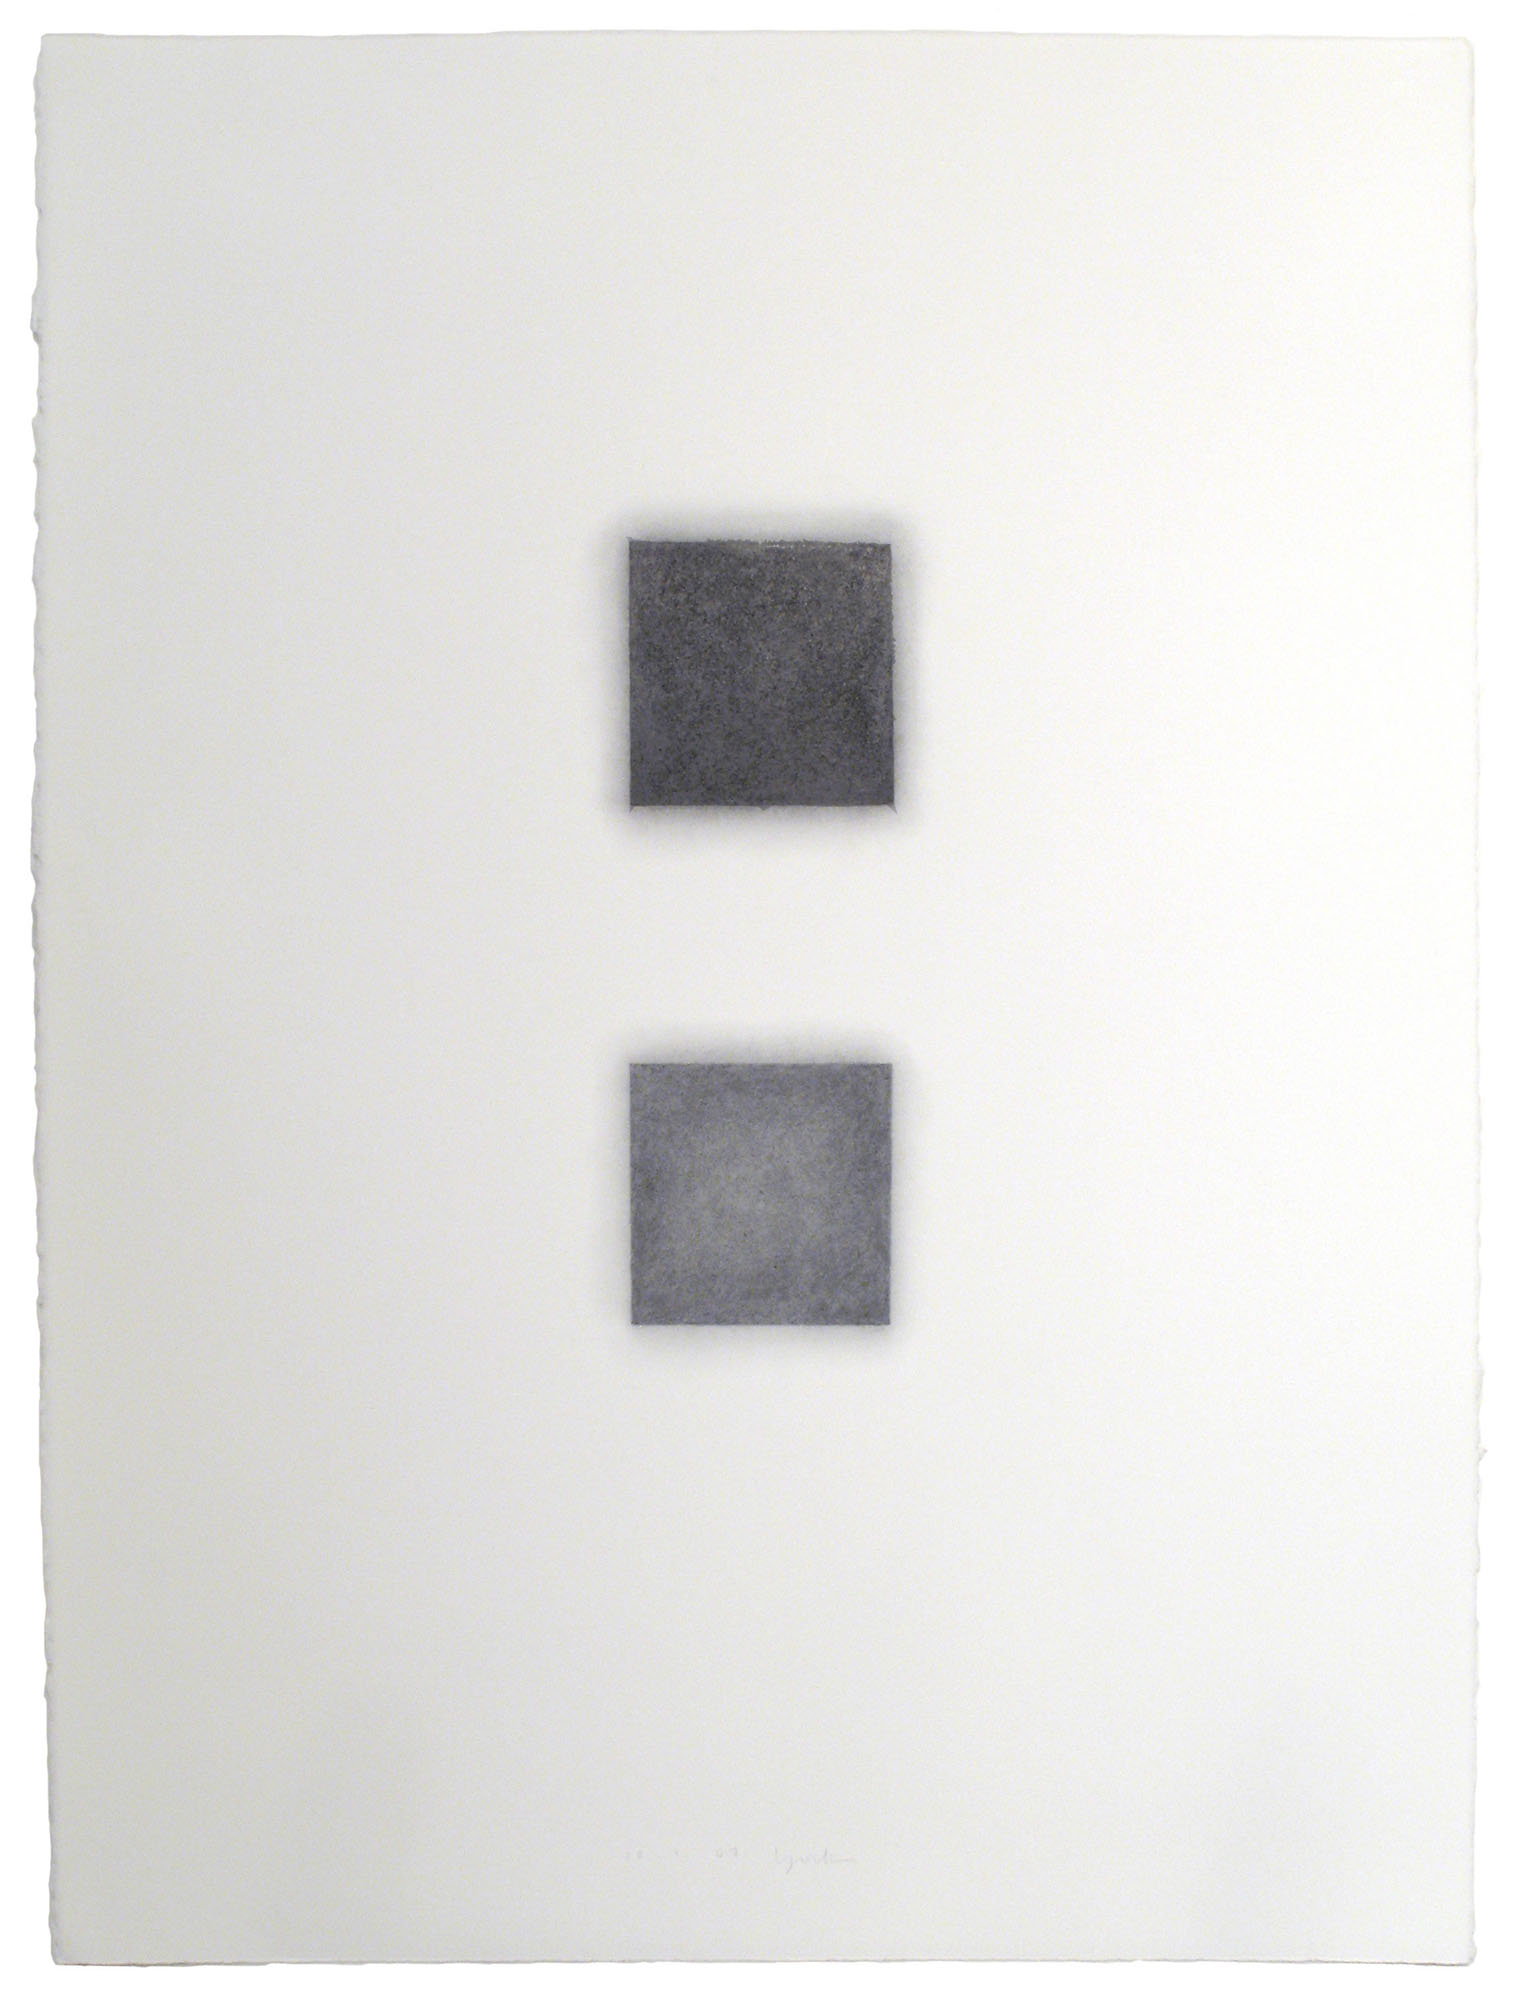   Skewed Square, no. 2, 3.1.07, 2007  Graphite pencil on paper,&nbsp;30” x 22” 